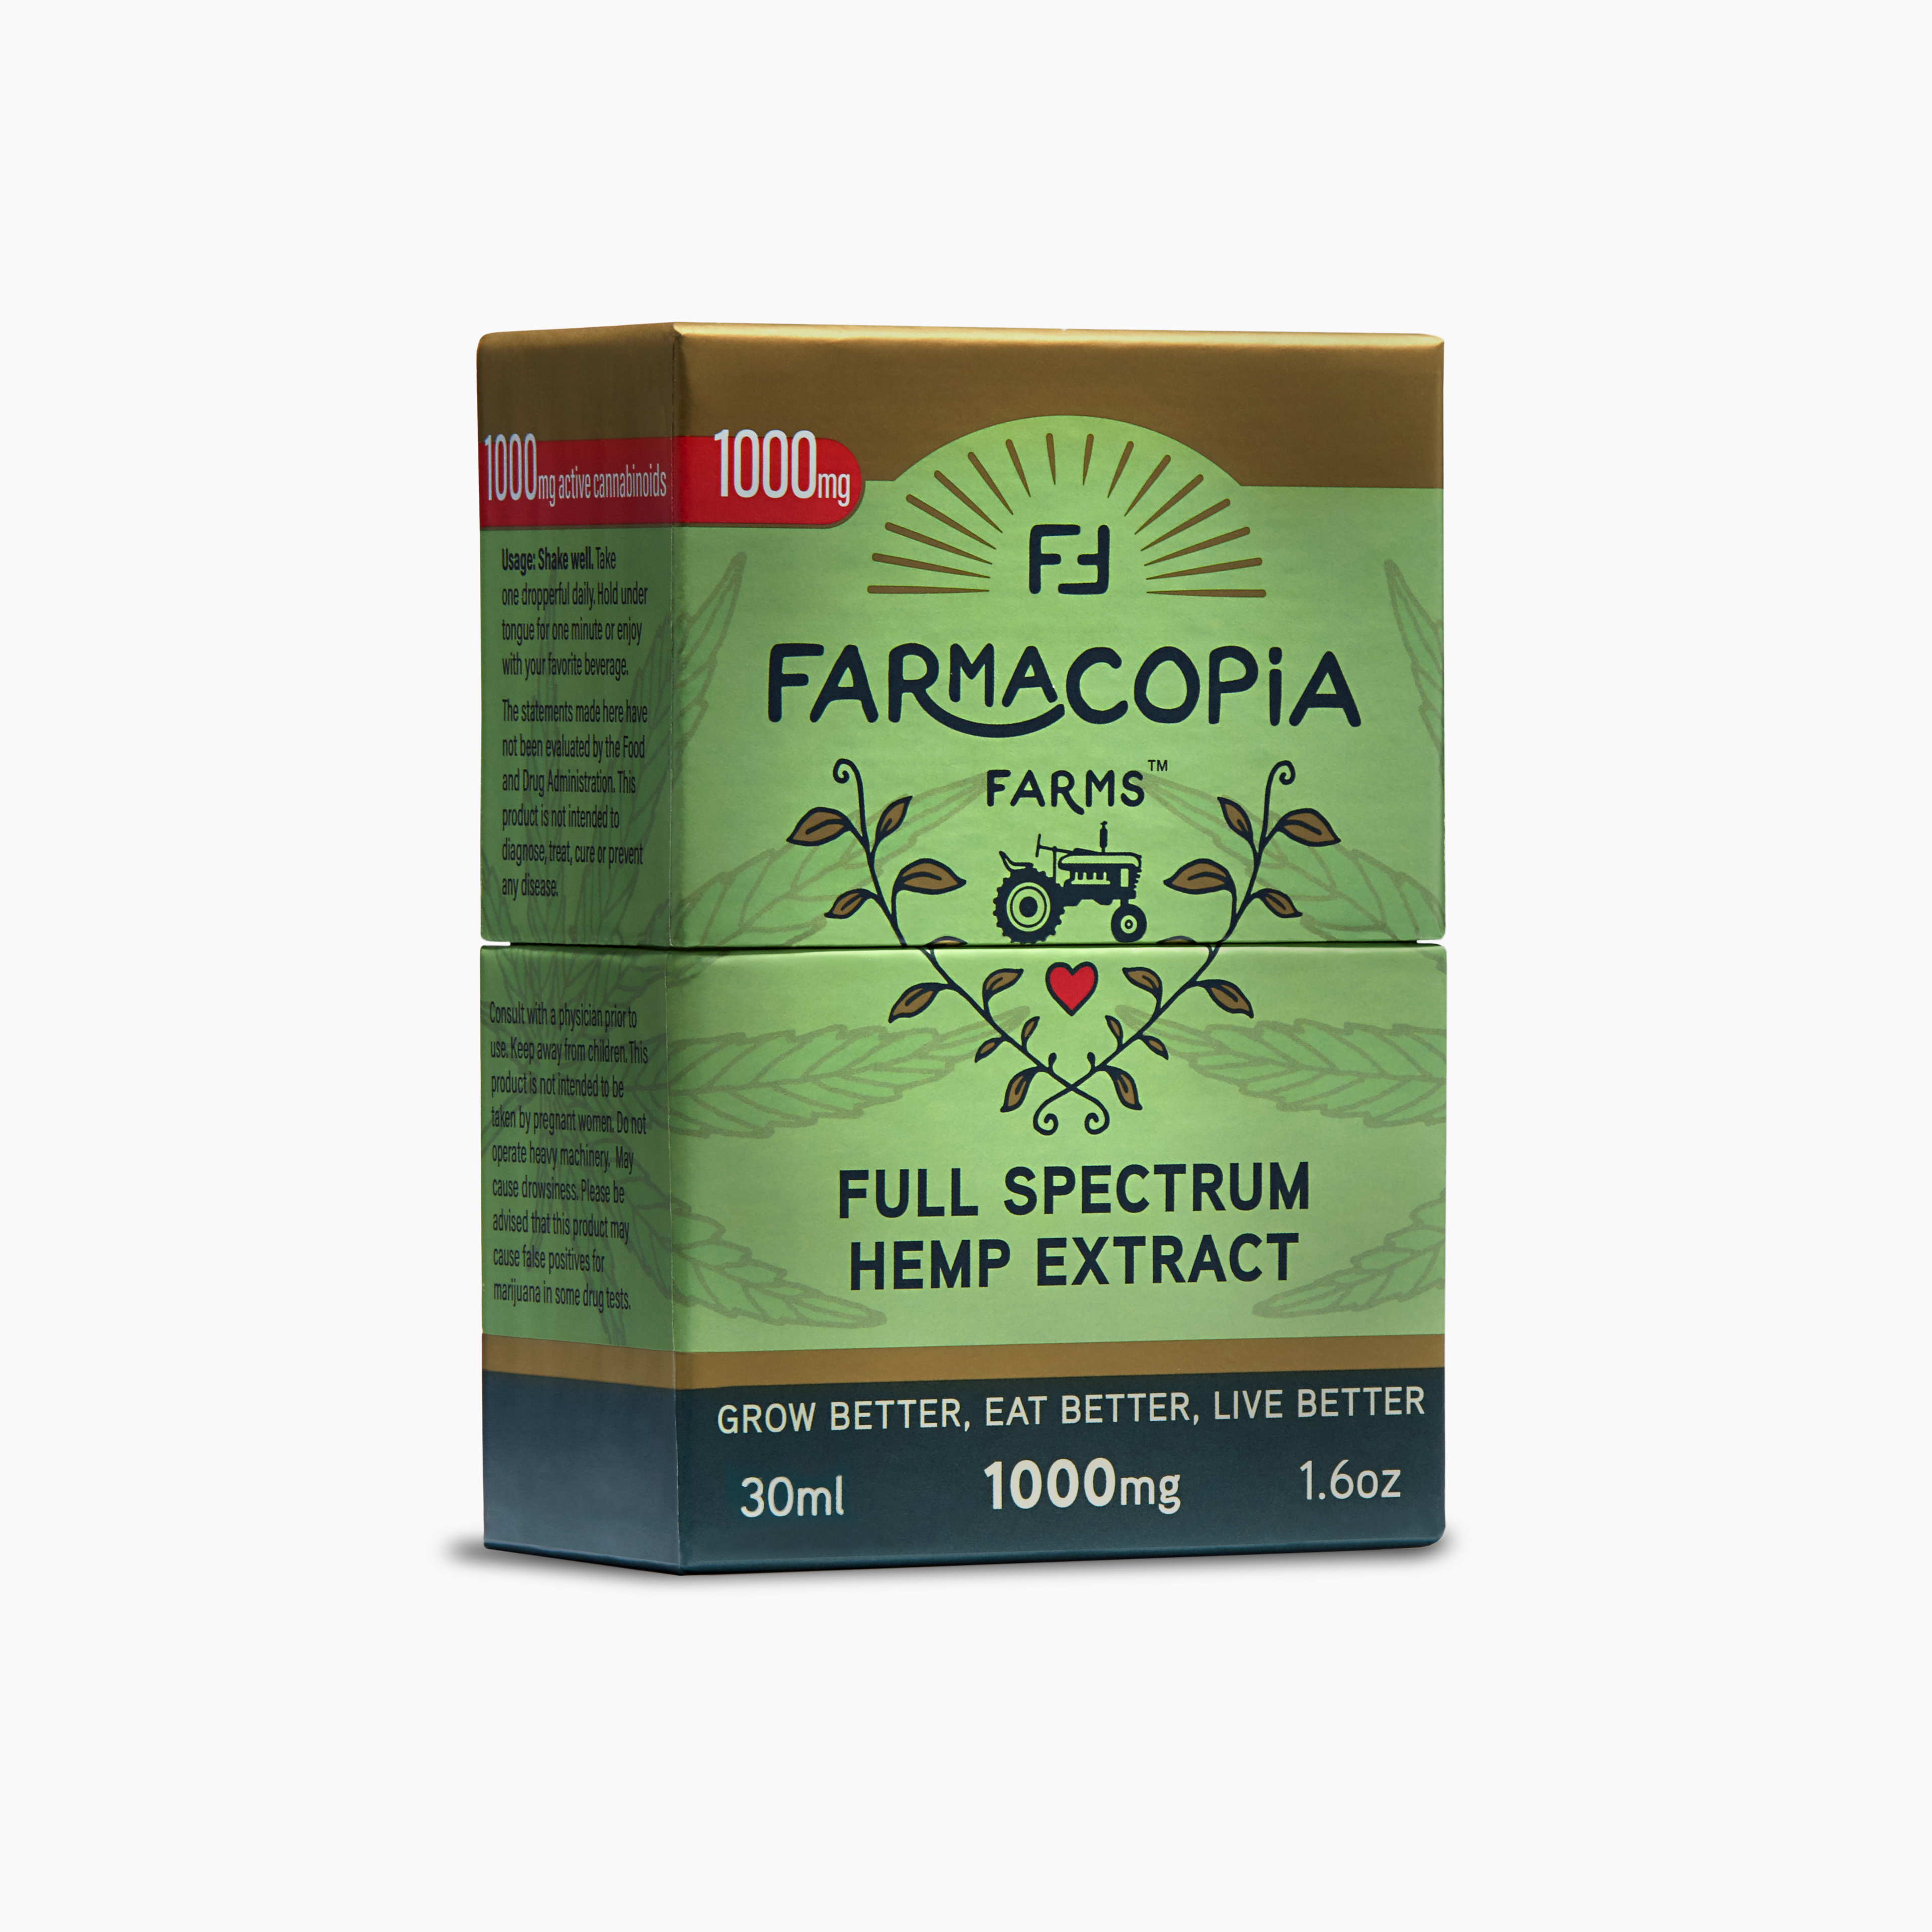 Farmacopia Farms Full Spectrum Hemp Extract, 1000mg